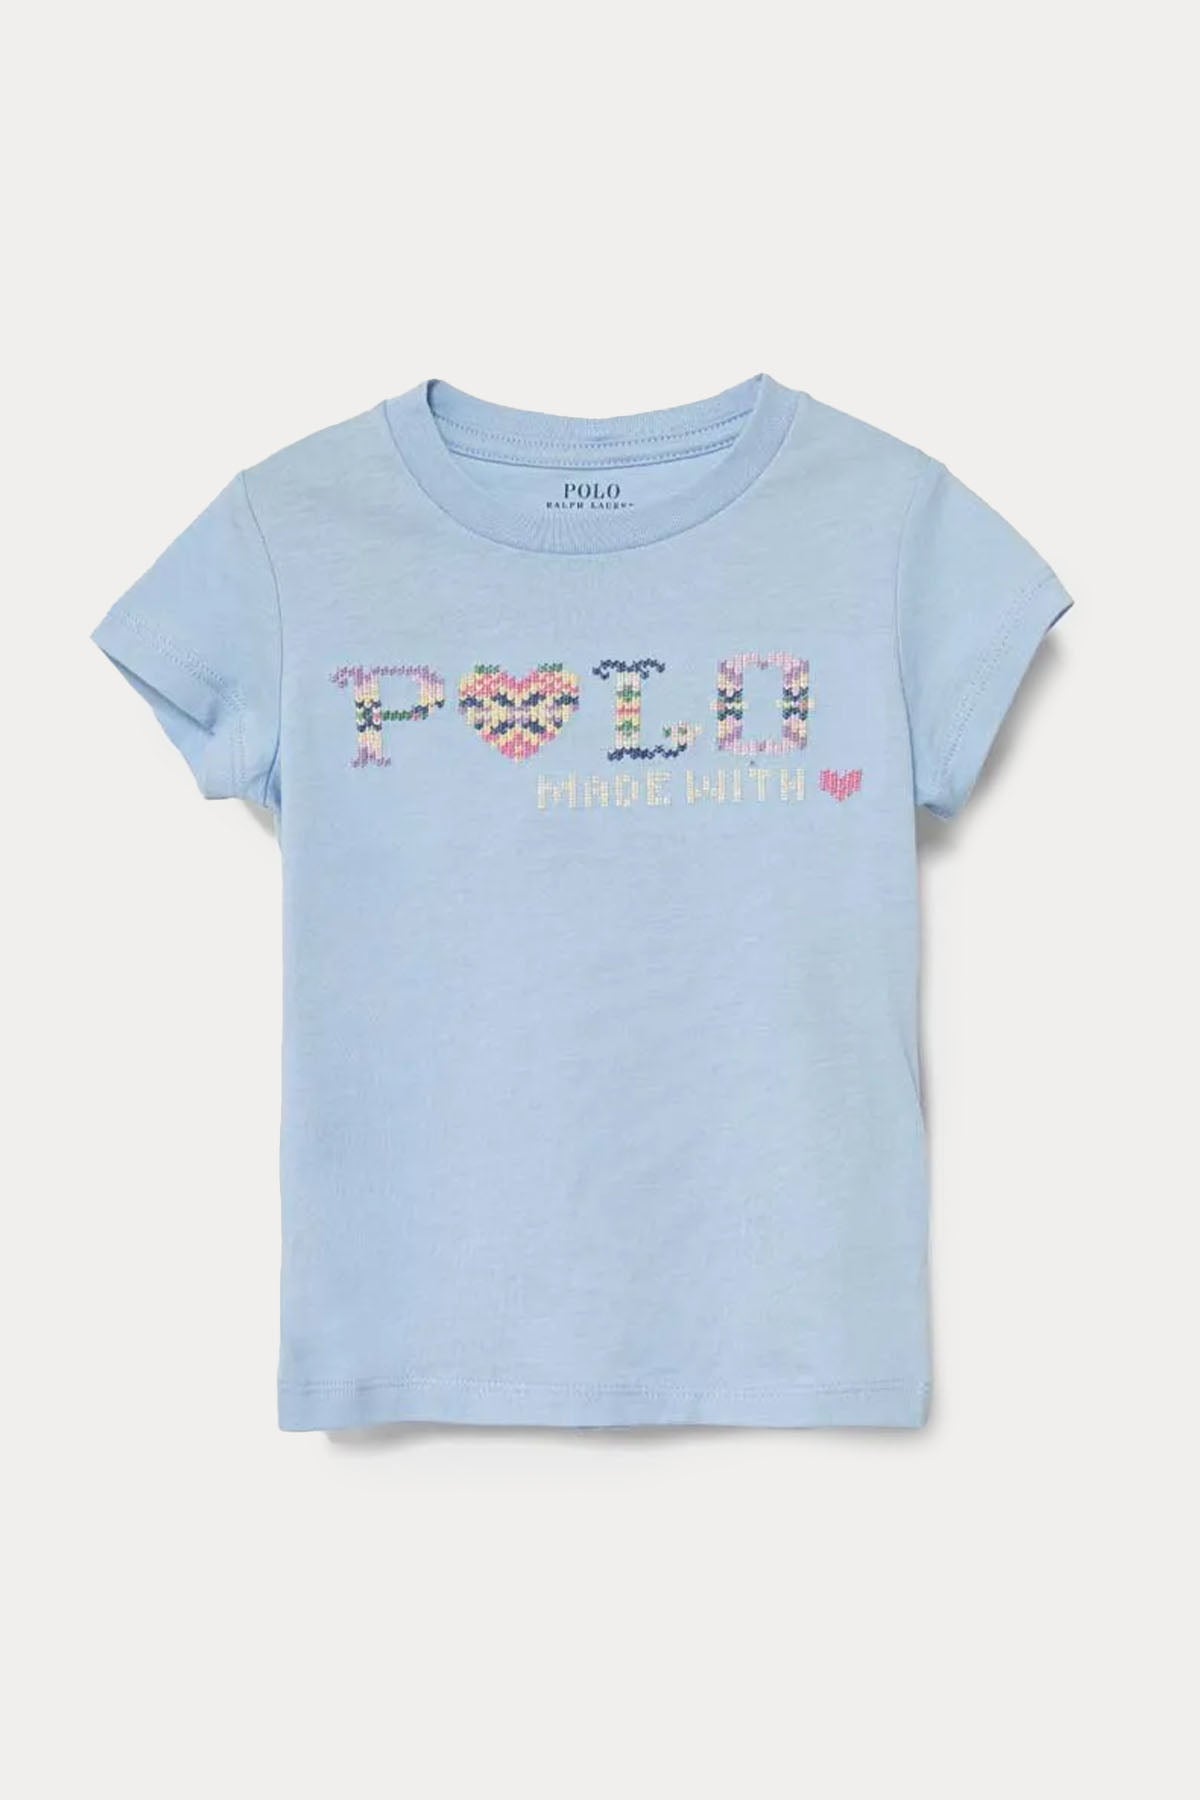 Polo Ralph Lauren Kids 2-4 Yaş Kız Çocuk Logolu Yuvarlak Yaka T-shirt